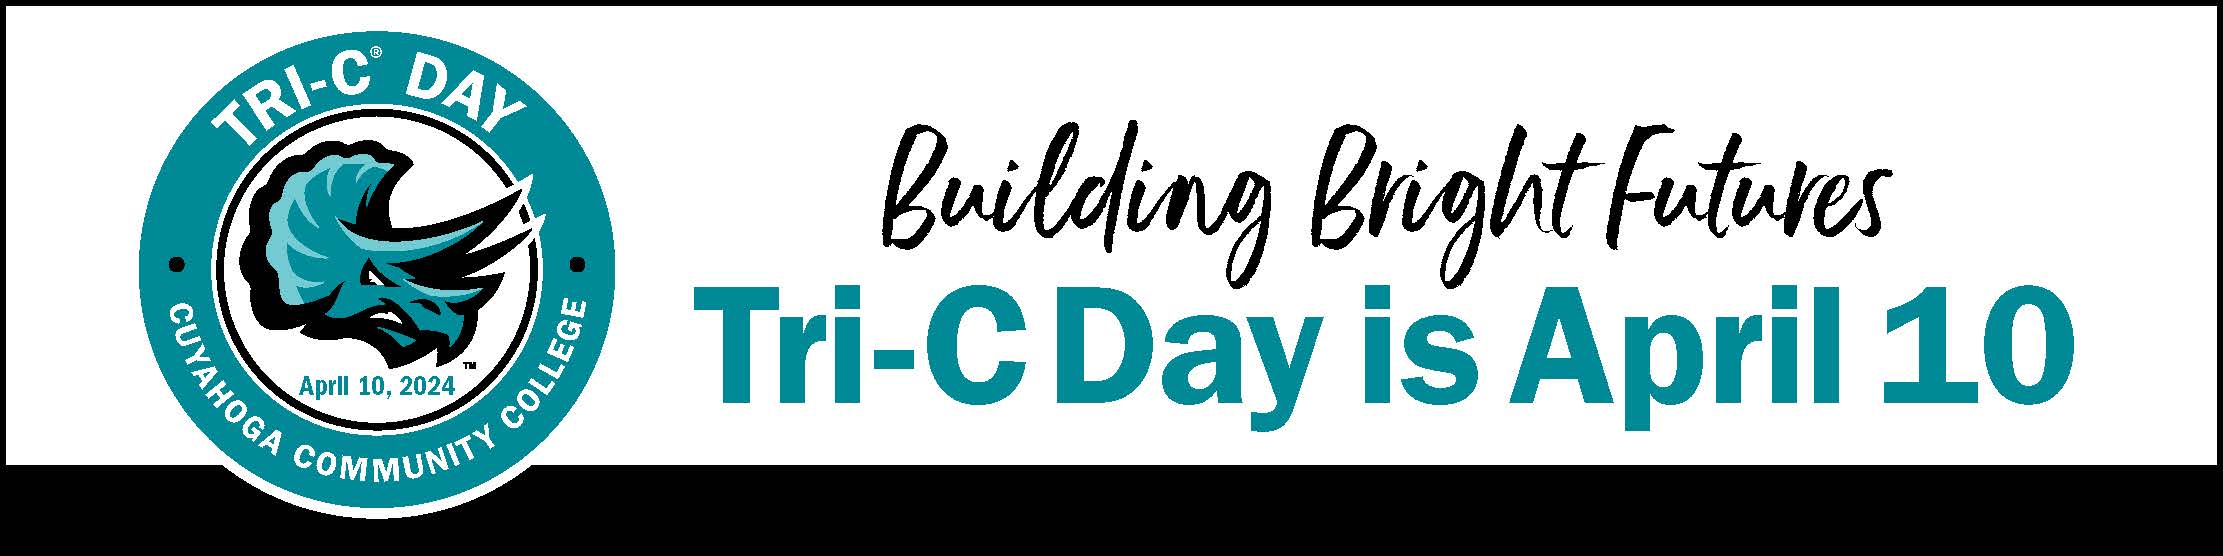 Tri-C Day logo